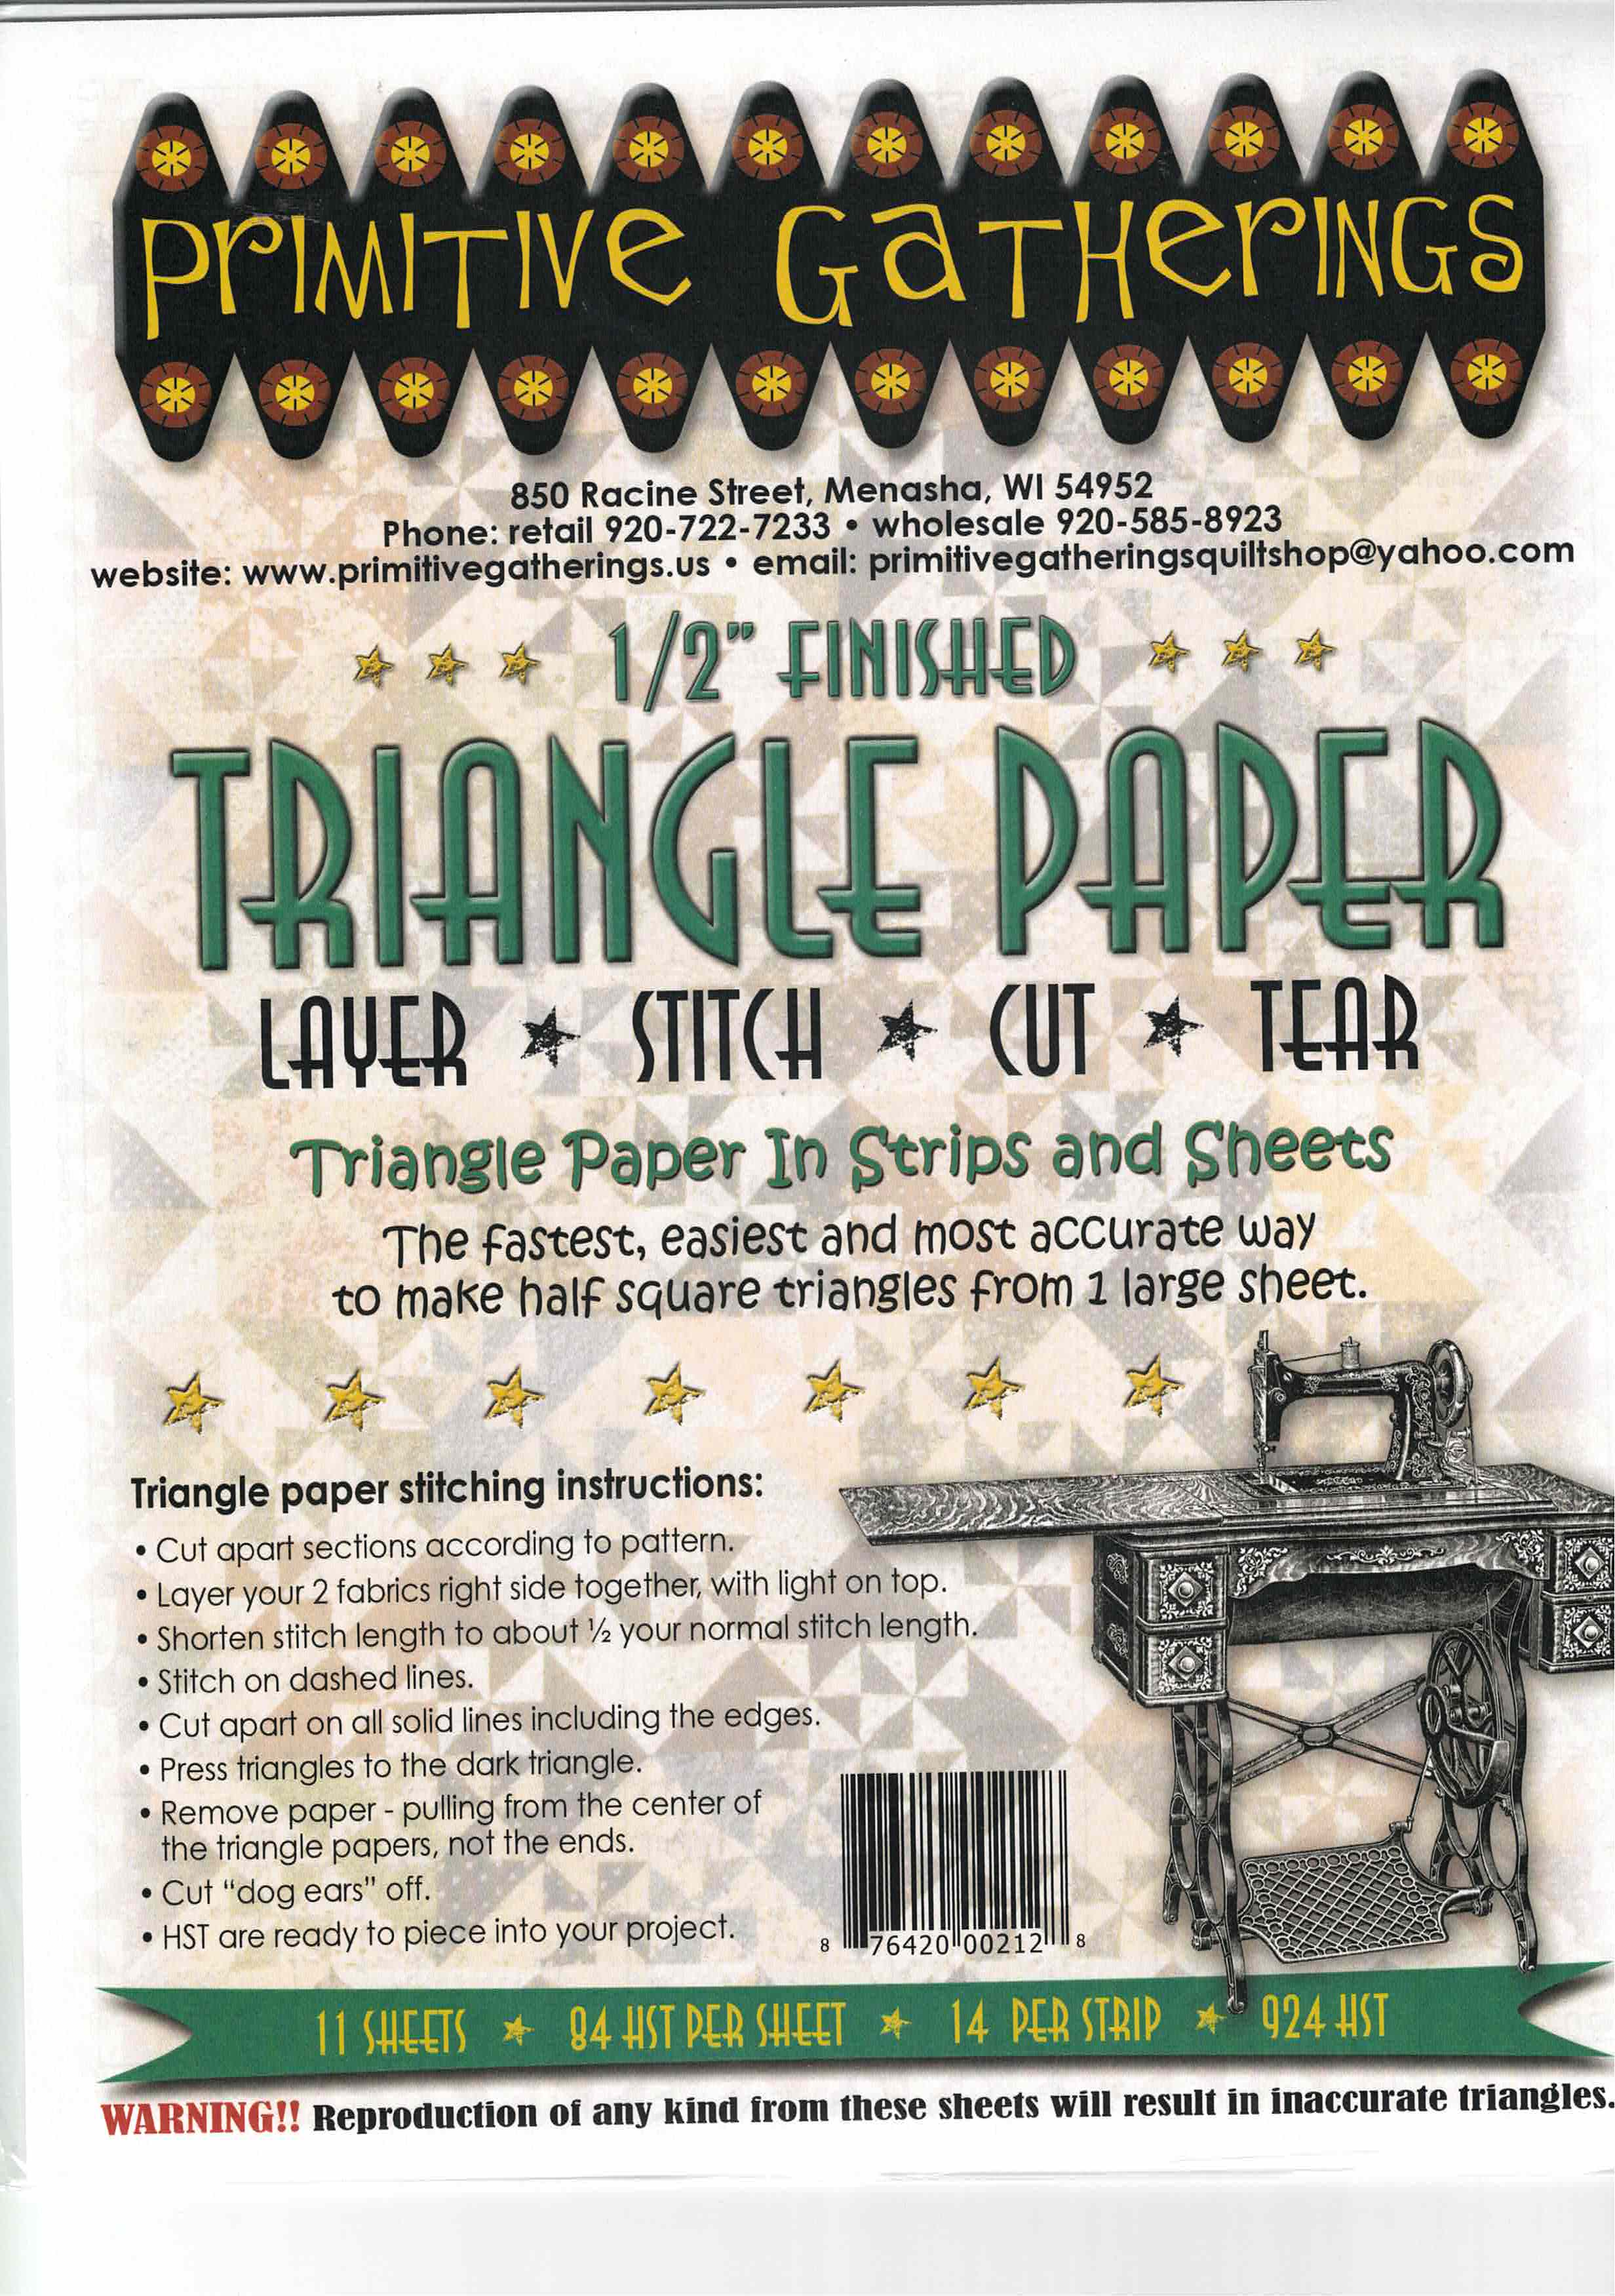 1-2" Finished Triangle Paper - PRI-212